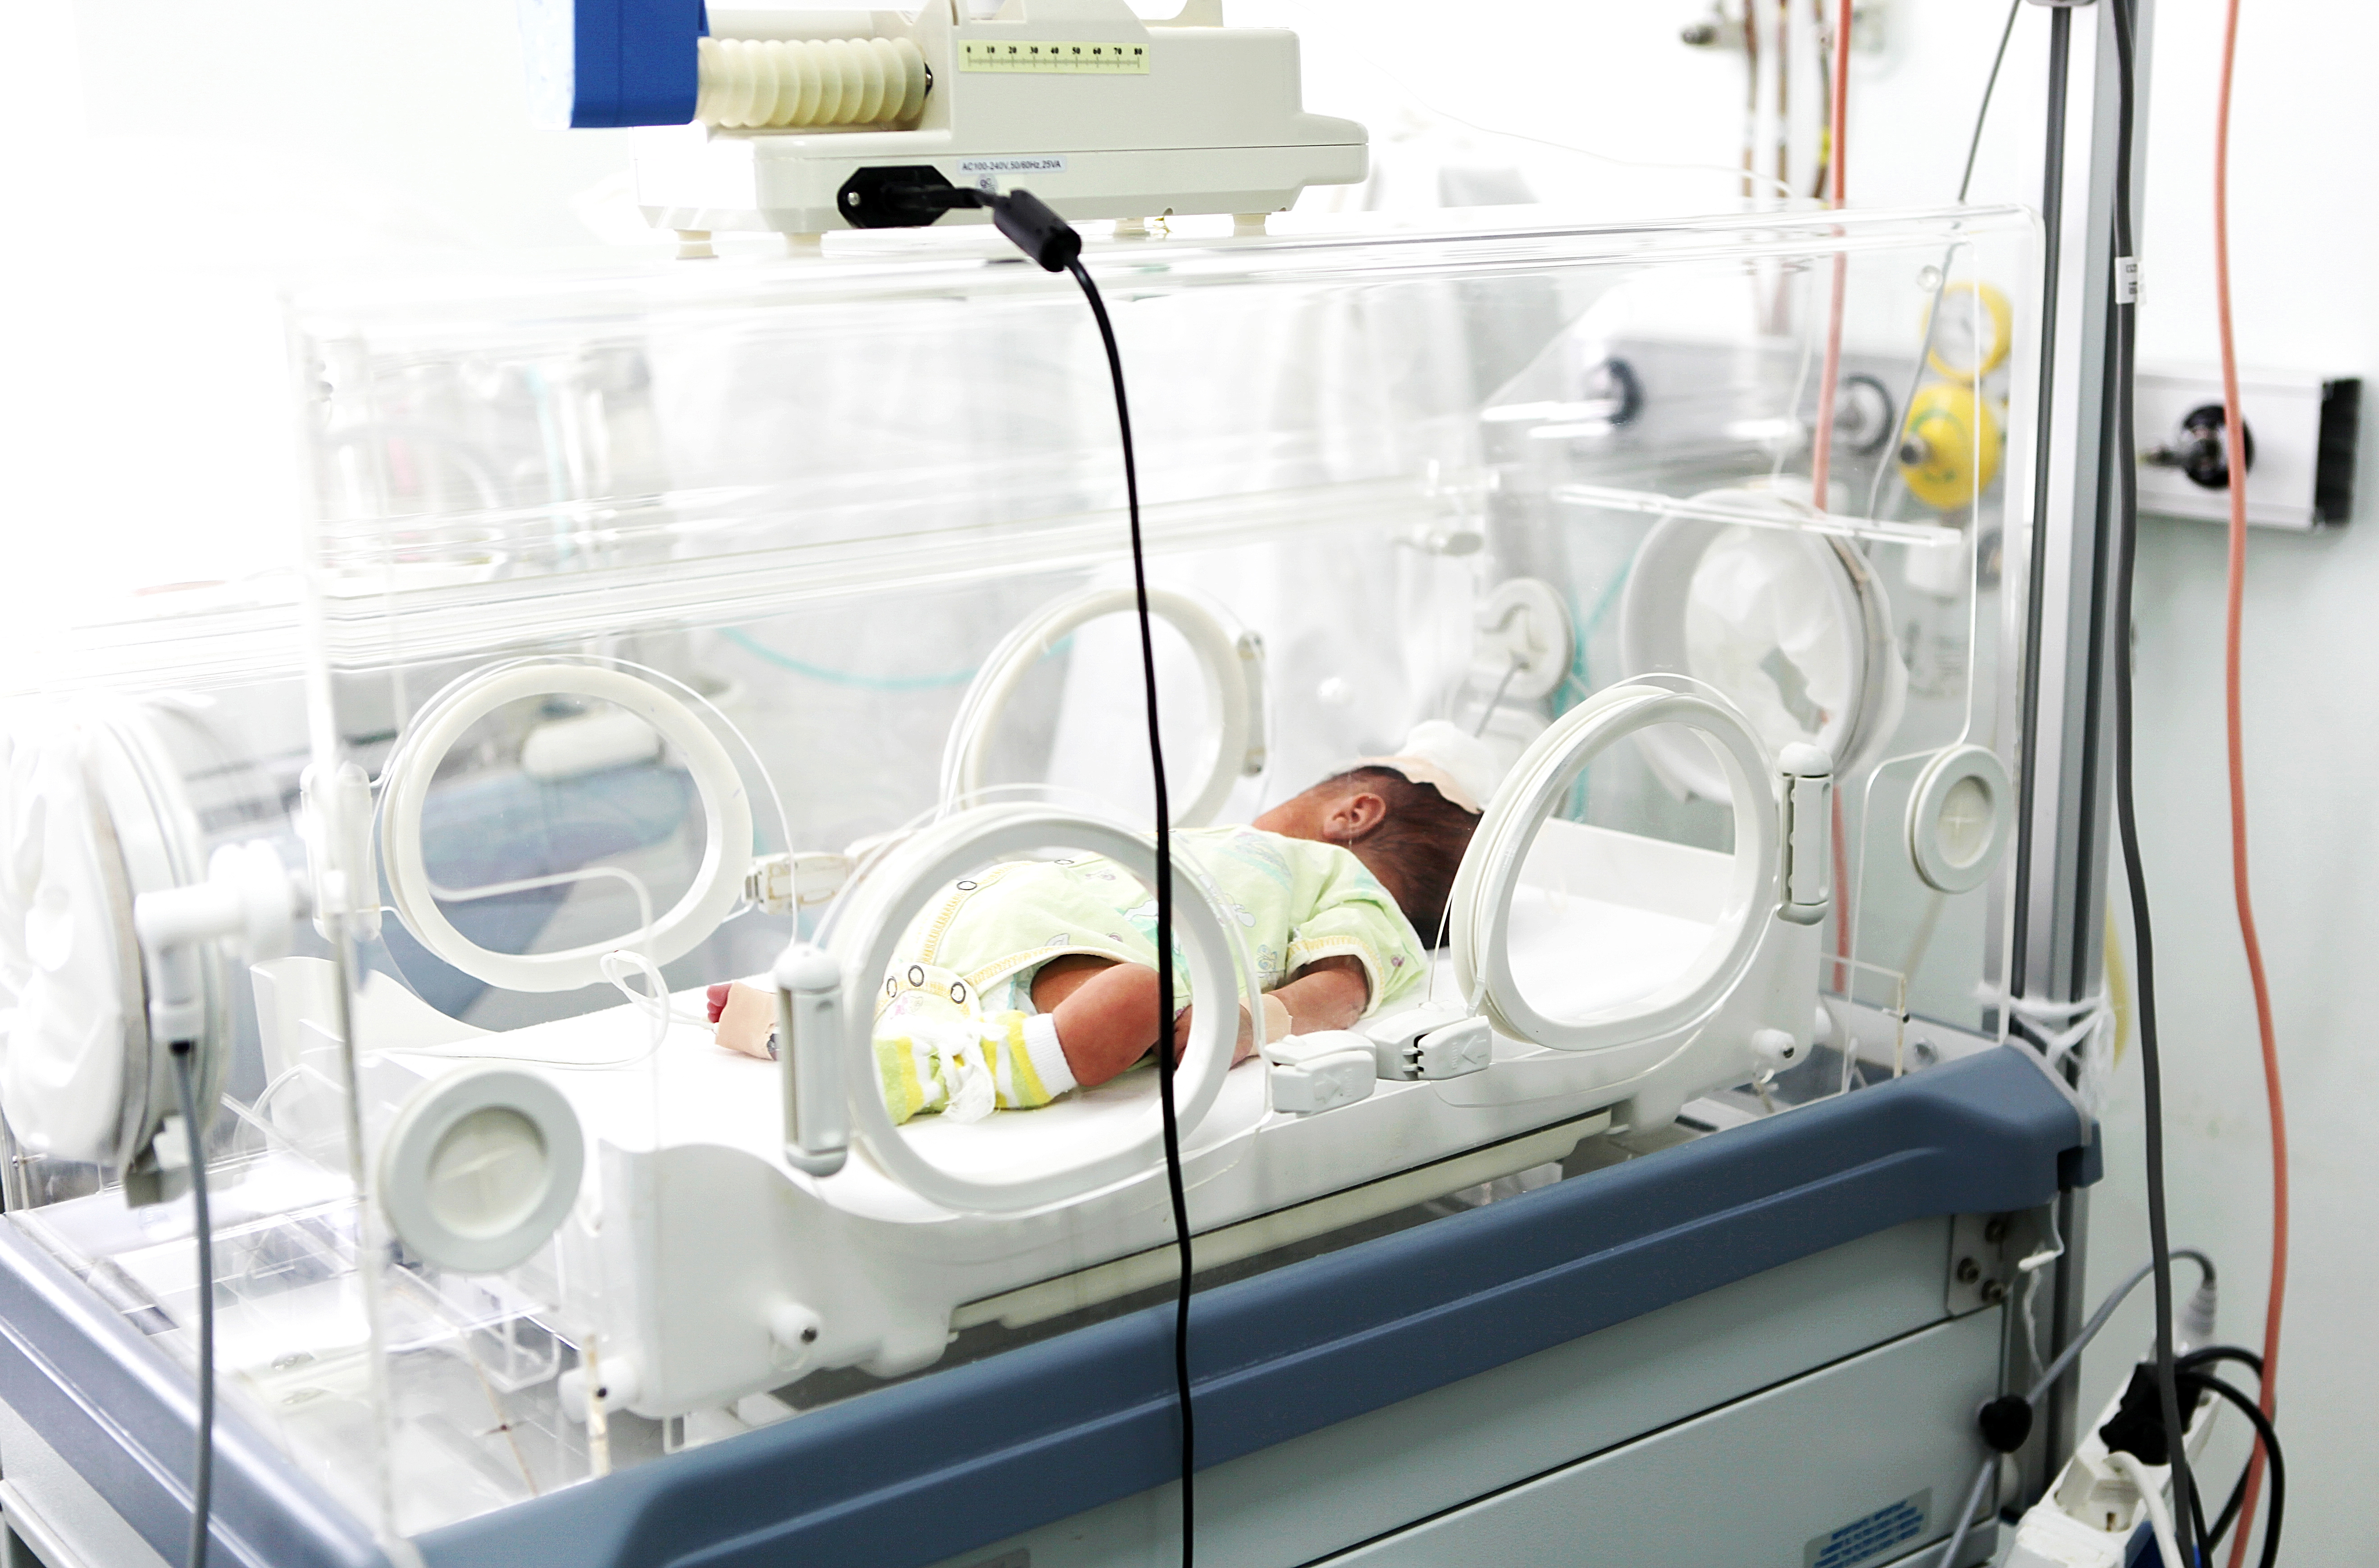 hospital incubator baby